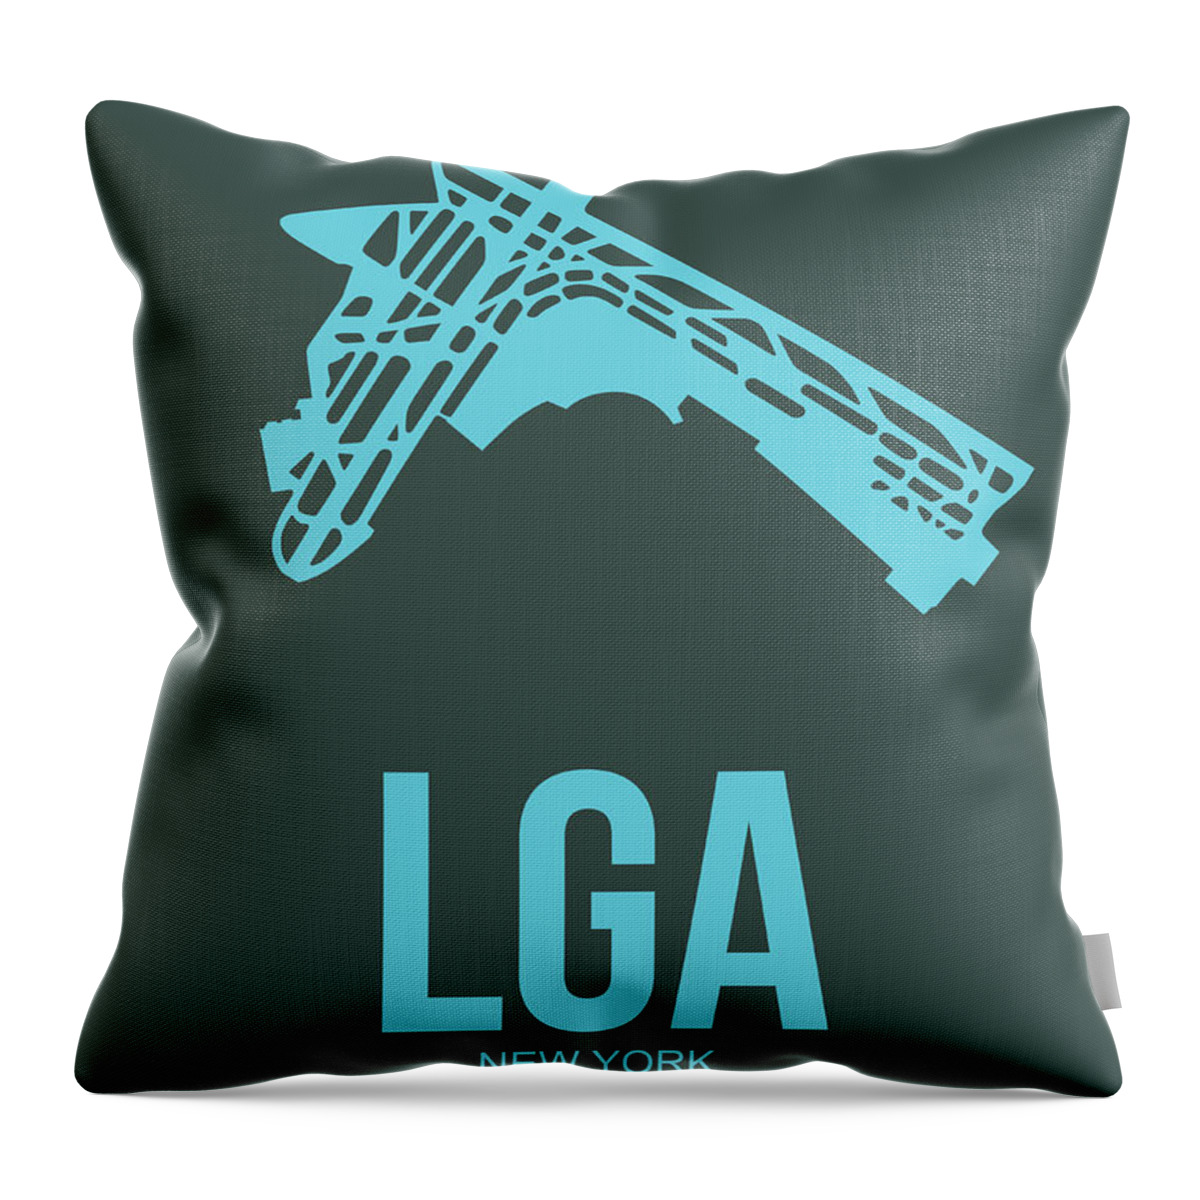  Throw Pillow featuring the digital art LGA New York Airport 3 by Naxart Studio